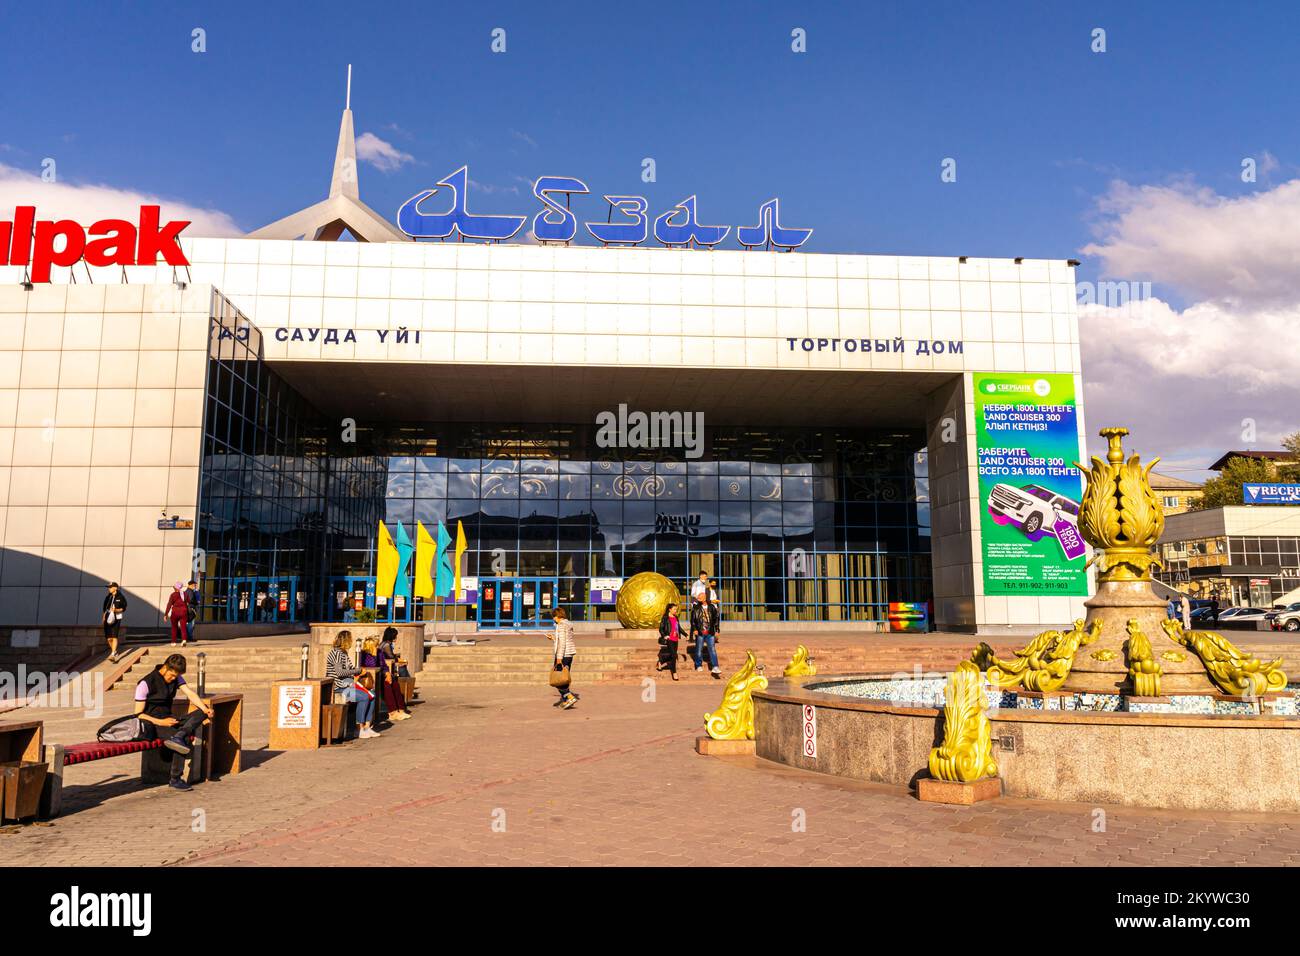 Abzal - central shopping mall in Karaganda, Kazakhstan. Urban central square, design and decor. Karagandy, Kazakhstan Stock Photo